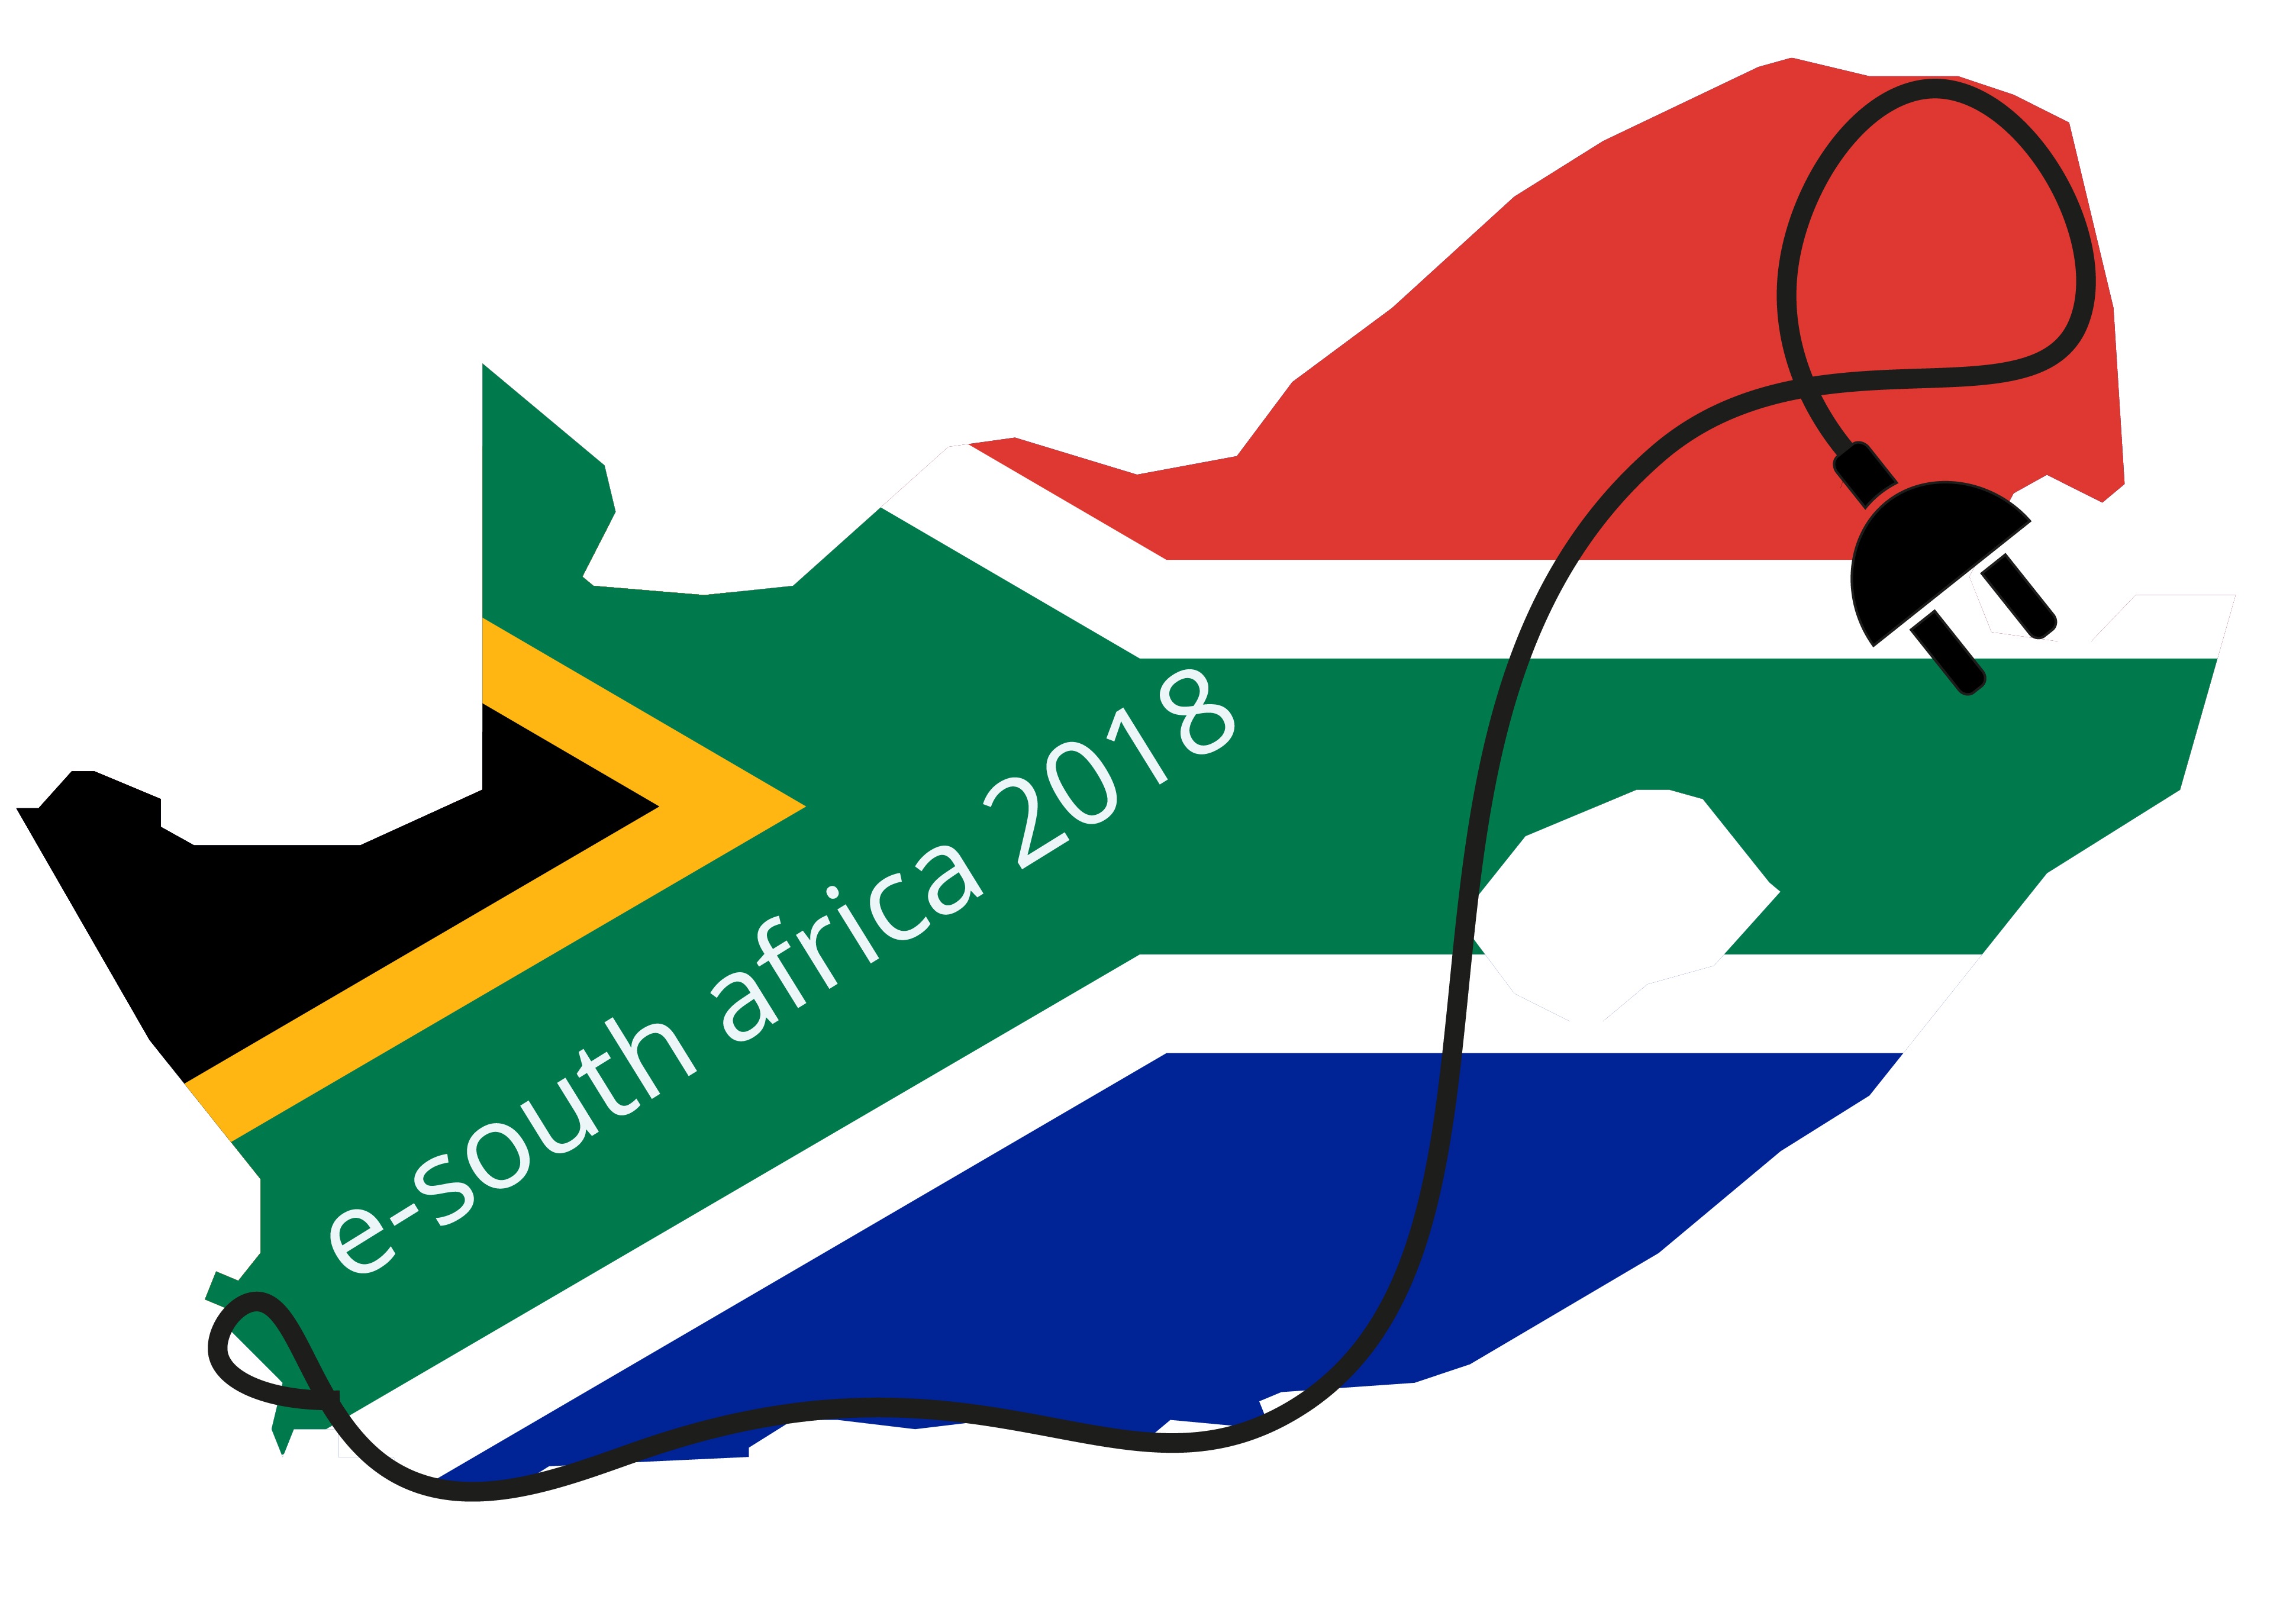 e-sud africa